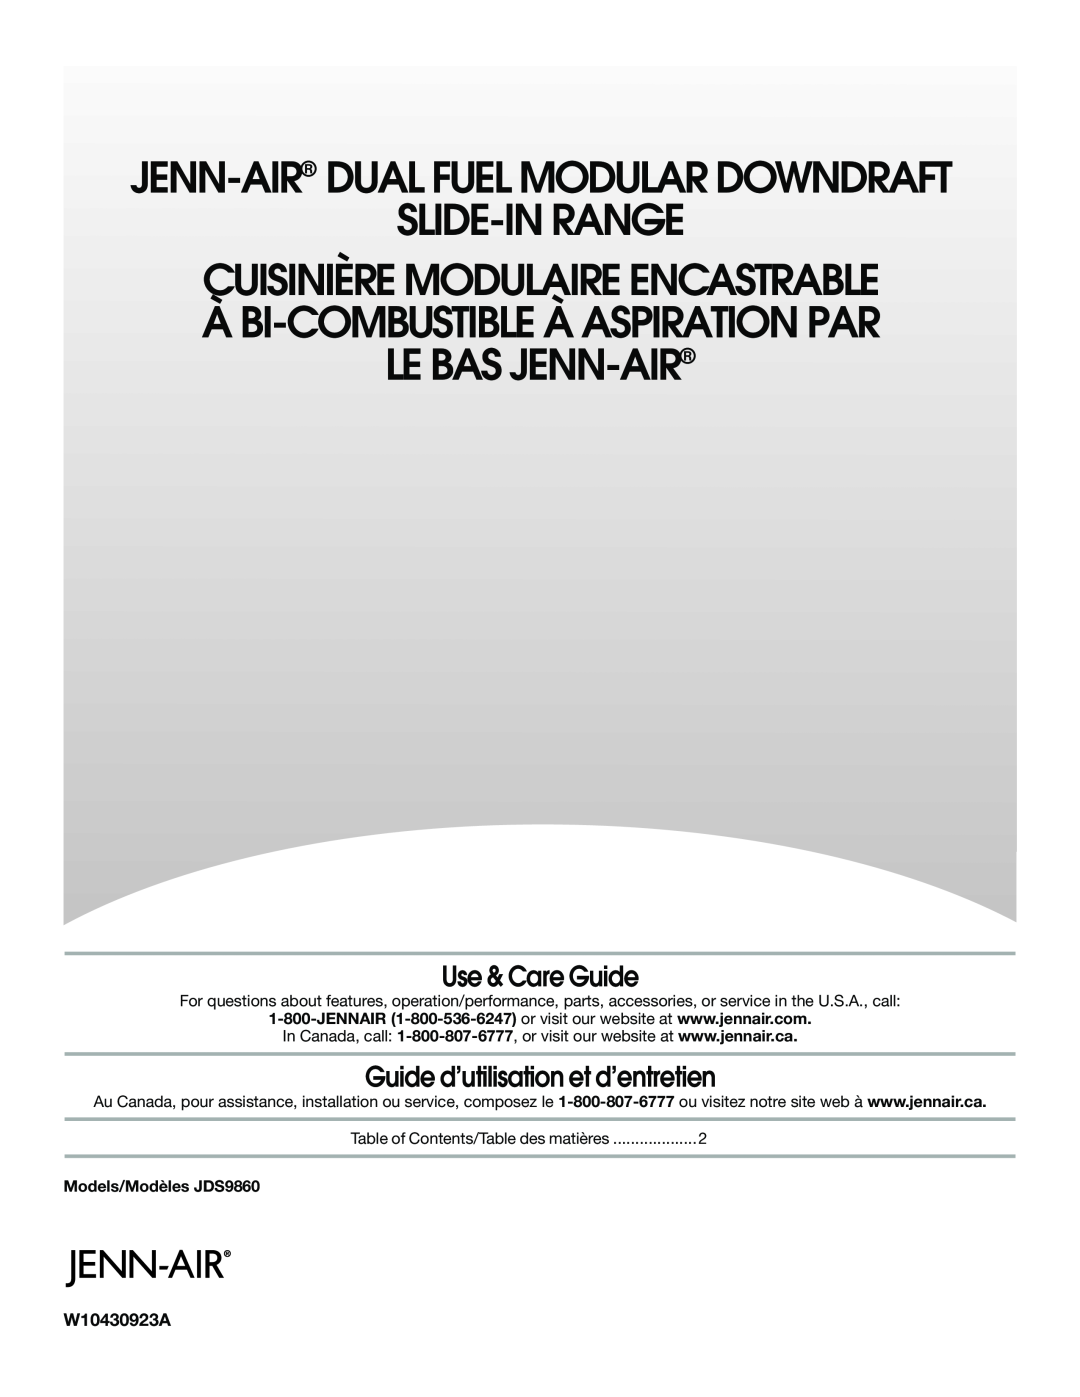 Jenn-Air JD59860 manual Slide-In Range Cuisinière Modulaire Encastrable, Jenn-Air Dual Fuel Modular Downdraft, W10430923A 